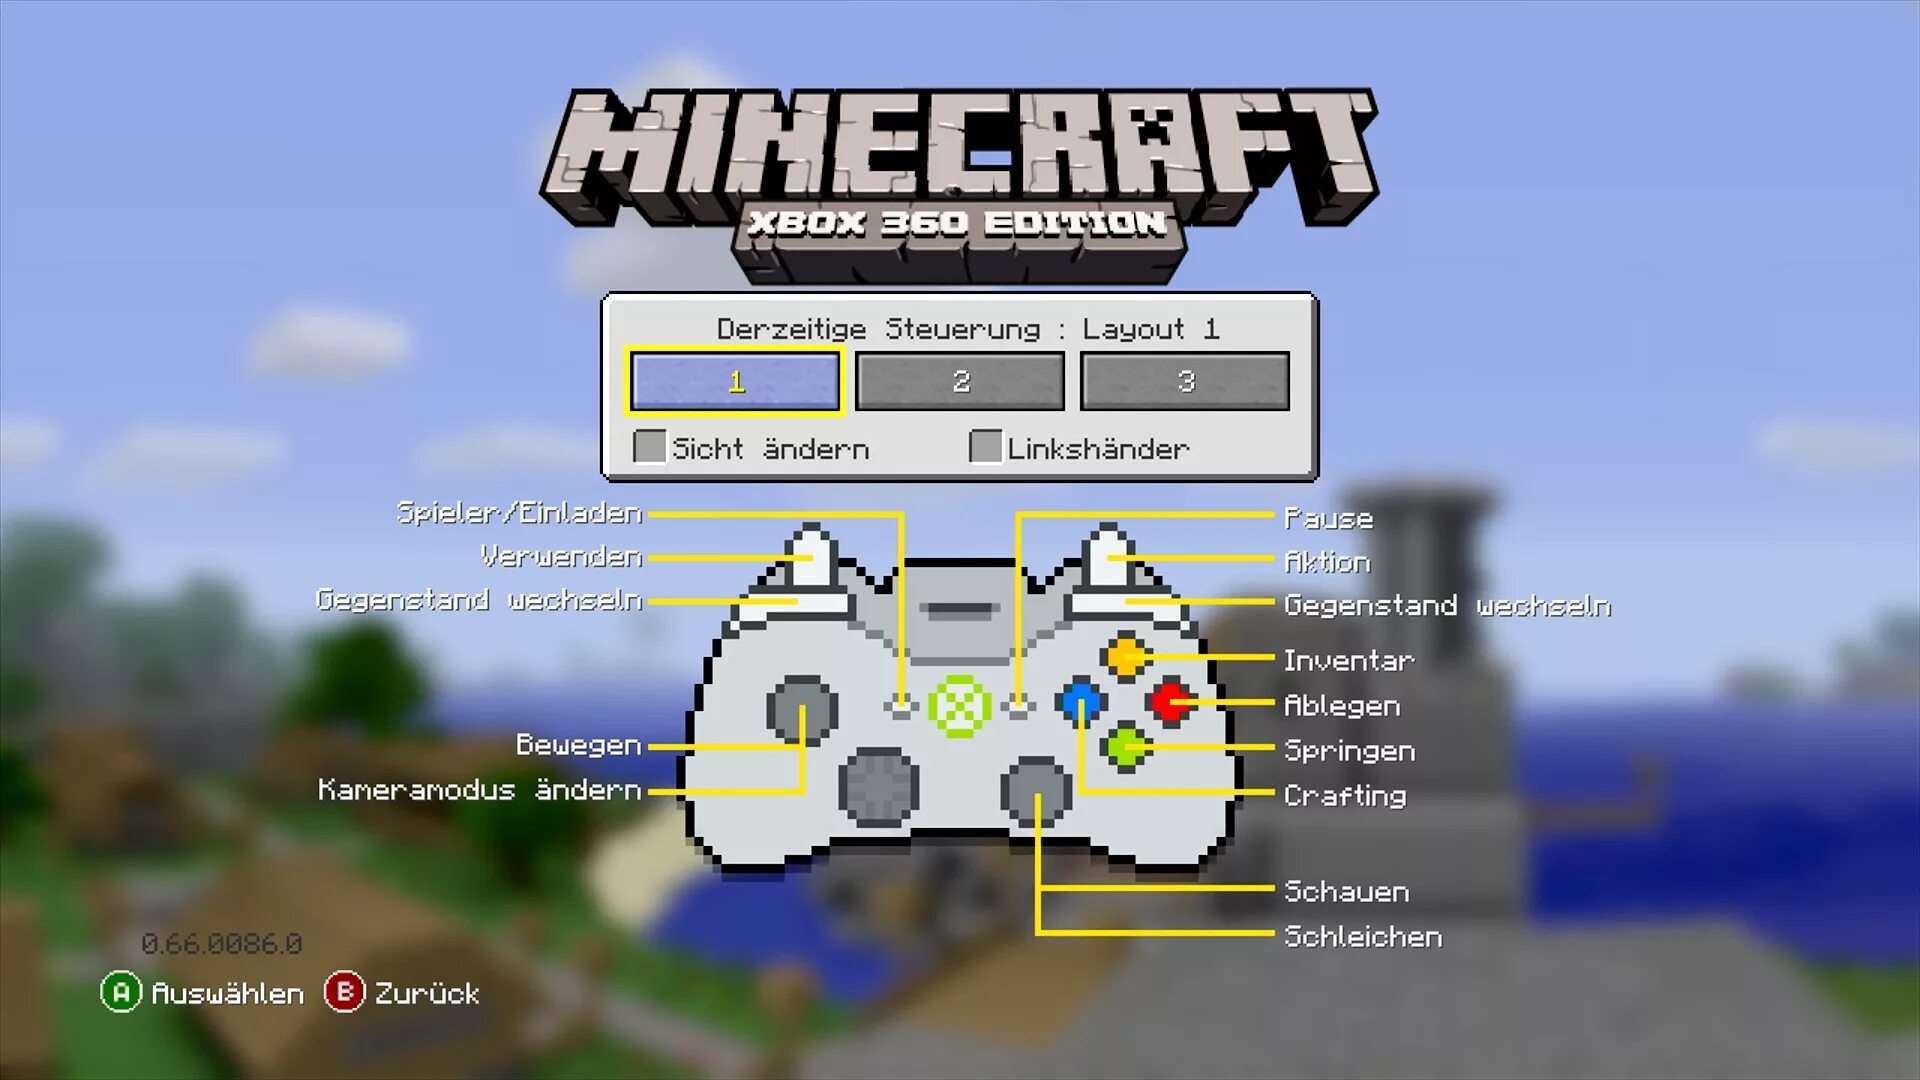 Управление майнкрафт Xbox 360. Xbox 360 main menu. Minecraft Xbox 360 Edition замок. Управление в МАЙНКРАФТЕ на джойстике.